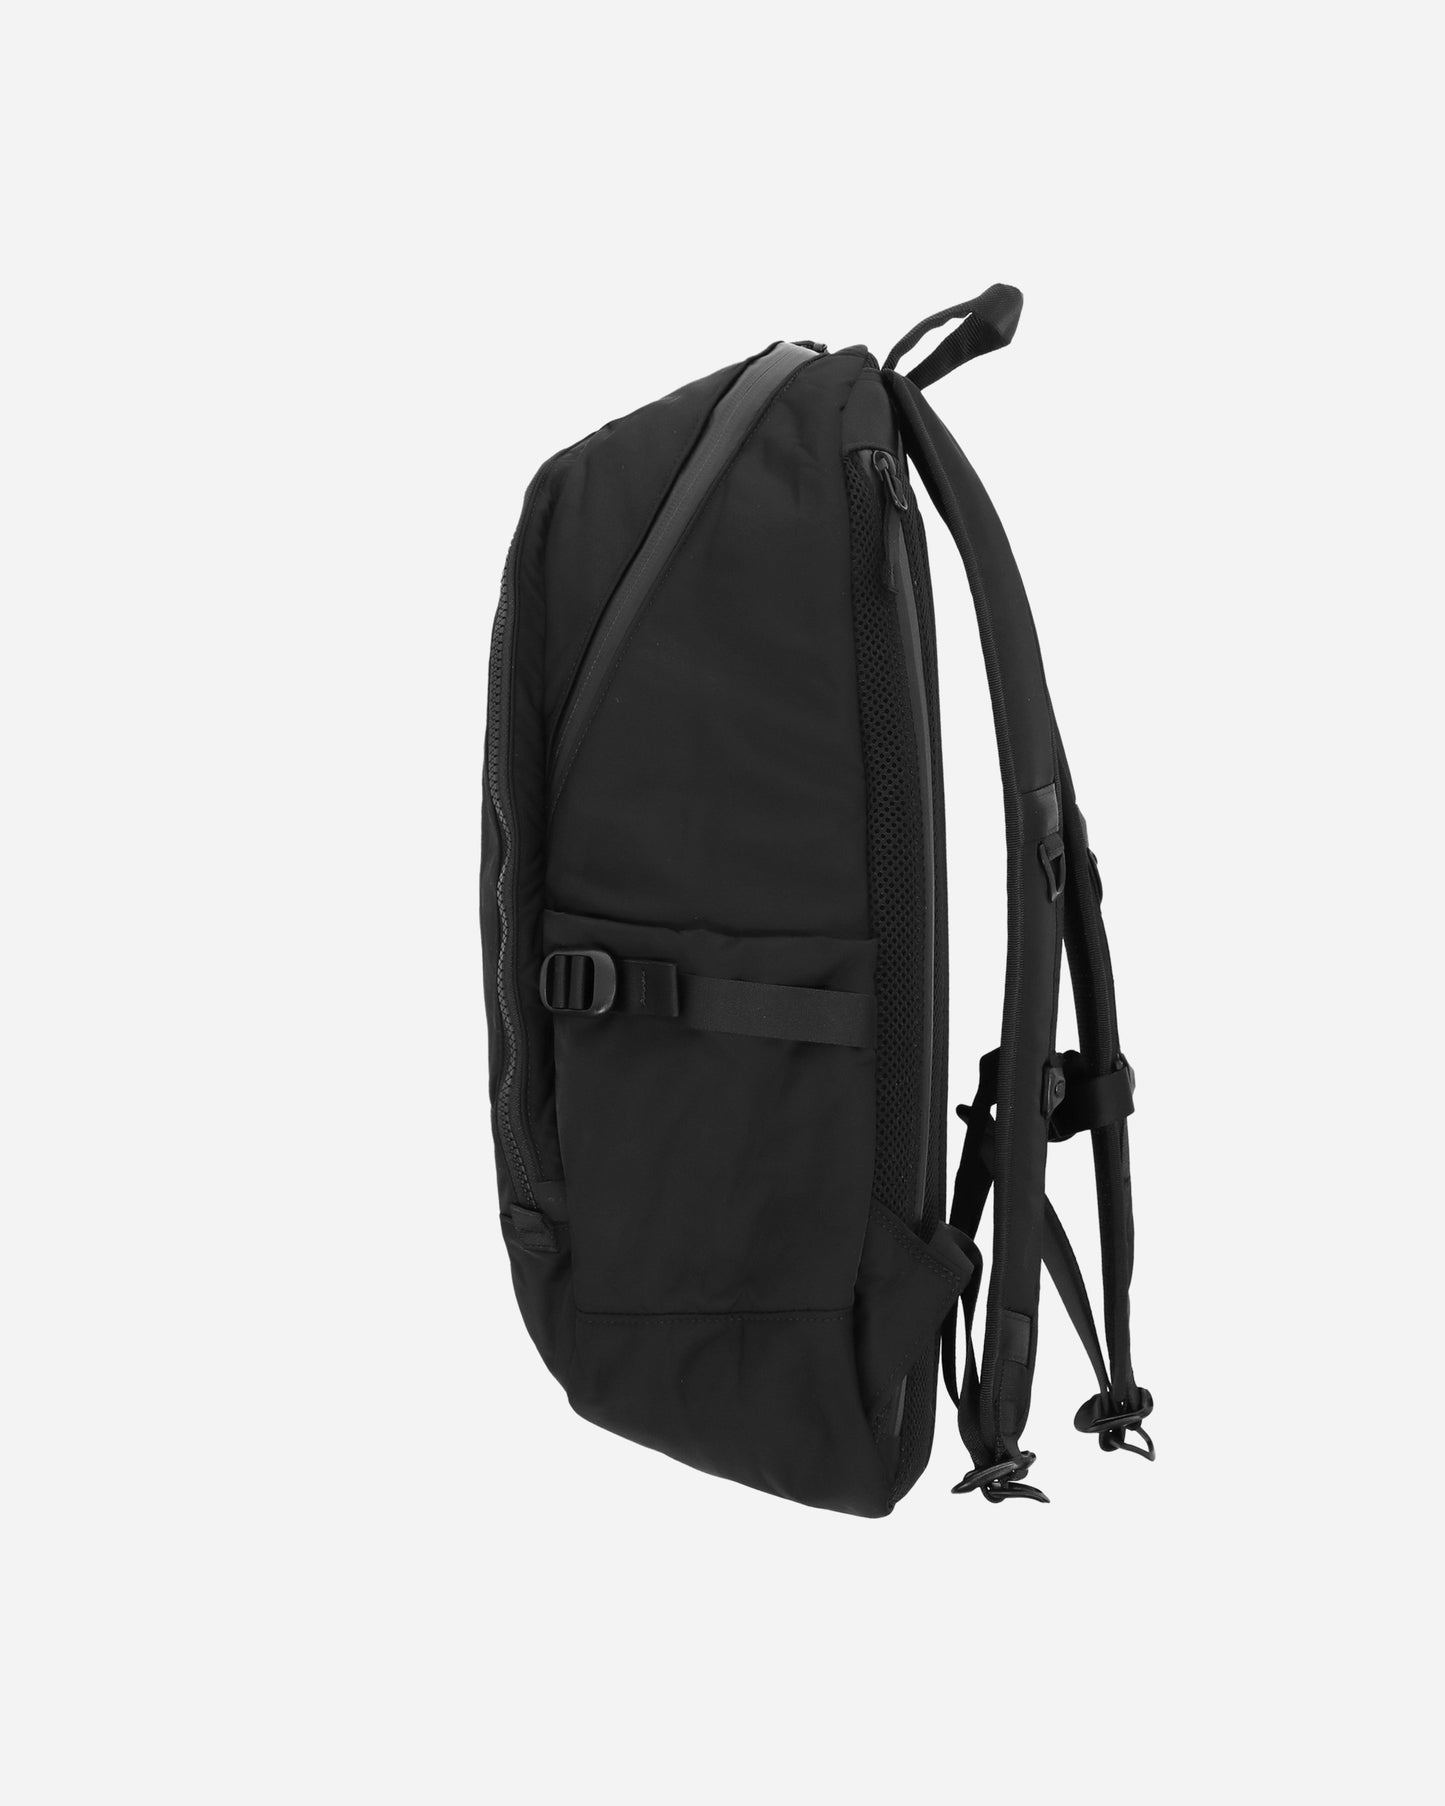 Ramidus Wallet X Fragment Design Black Bags and Backpacks Backpacks B017002  001